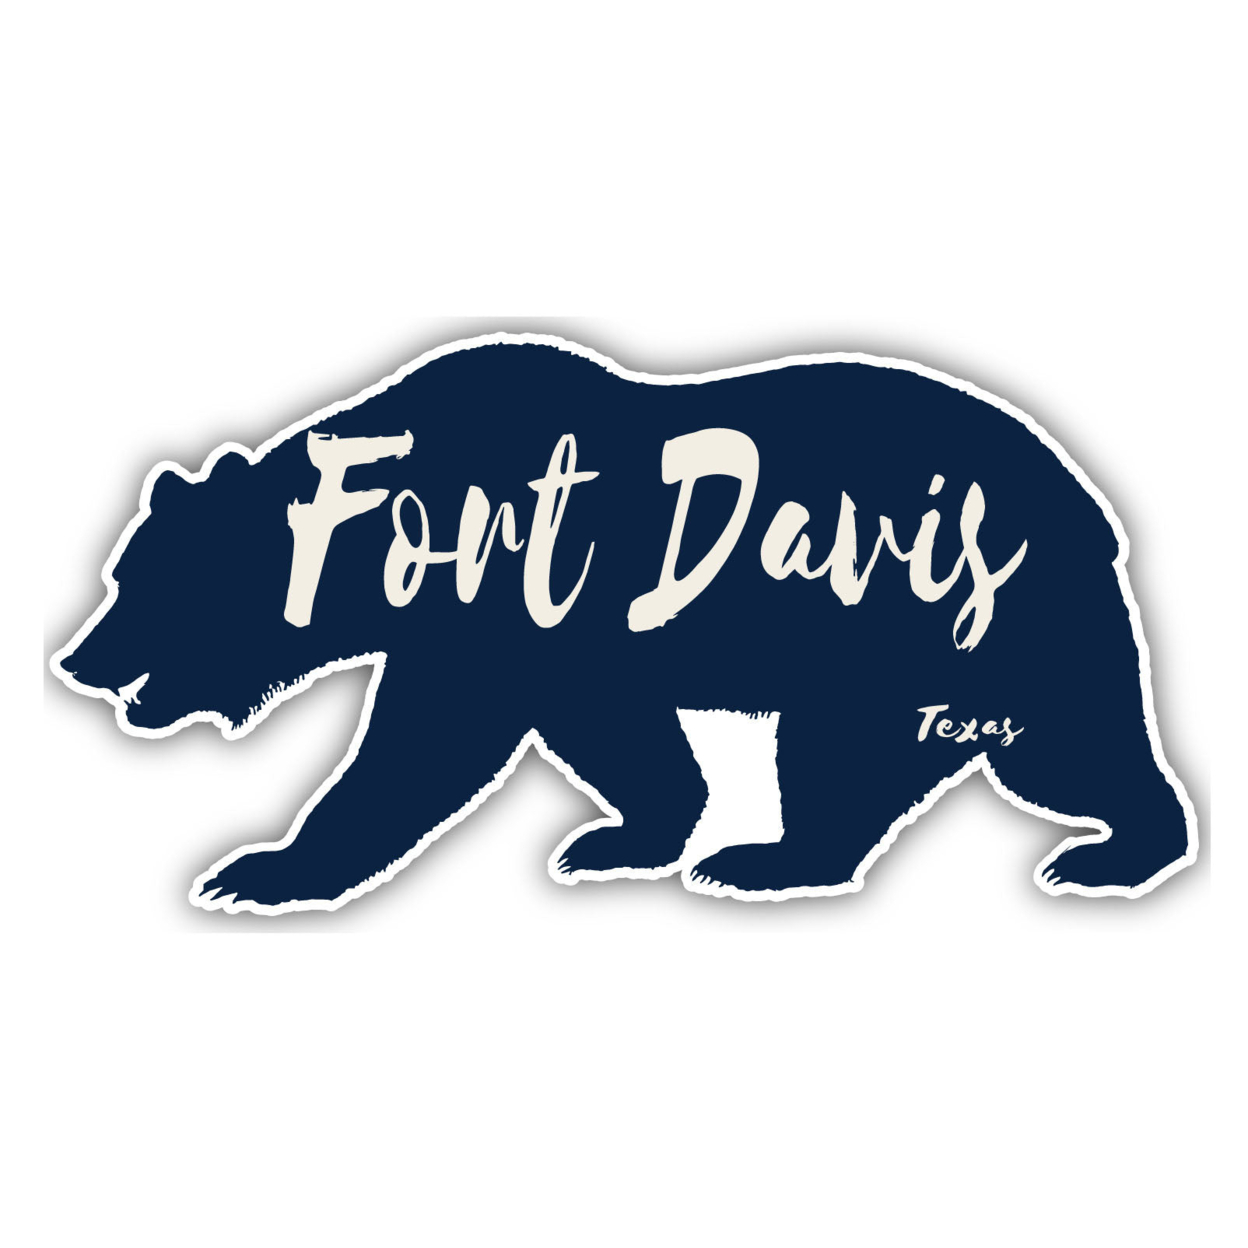 Fort Davis Texas Souvenir Decorative Stickers (Choose Theme And Size) - Single Unit, 6-Inch, Bear